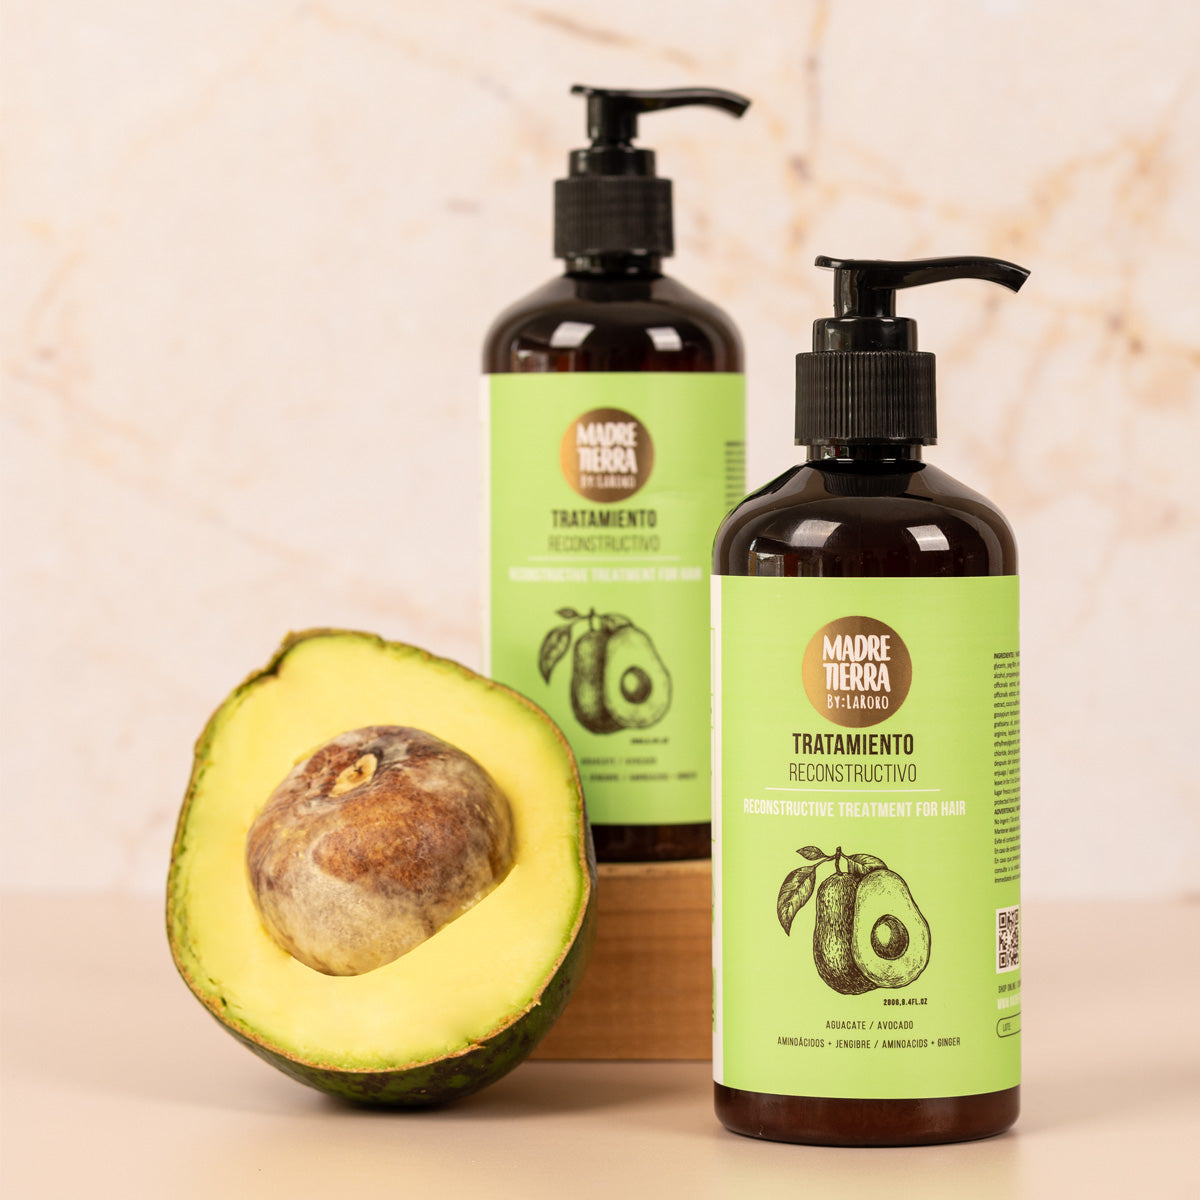 Shampoo Nutritivo para Cabello seco + Tratamiento Reconstructivo - Madre Tierra Oficial